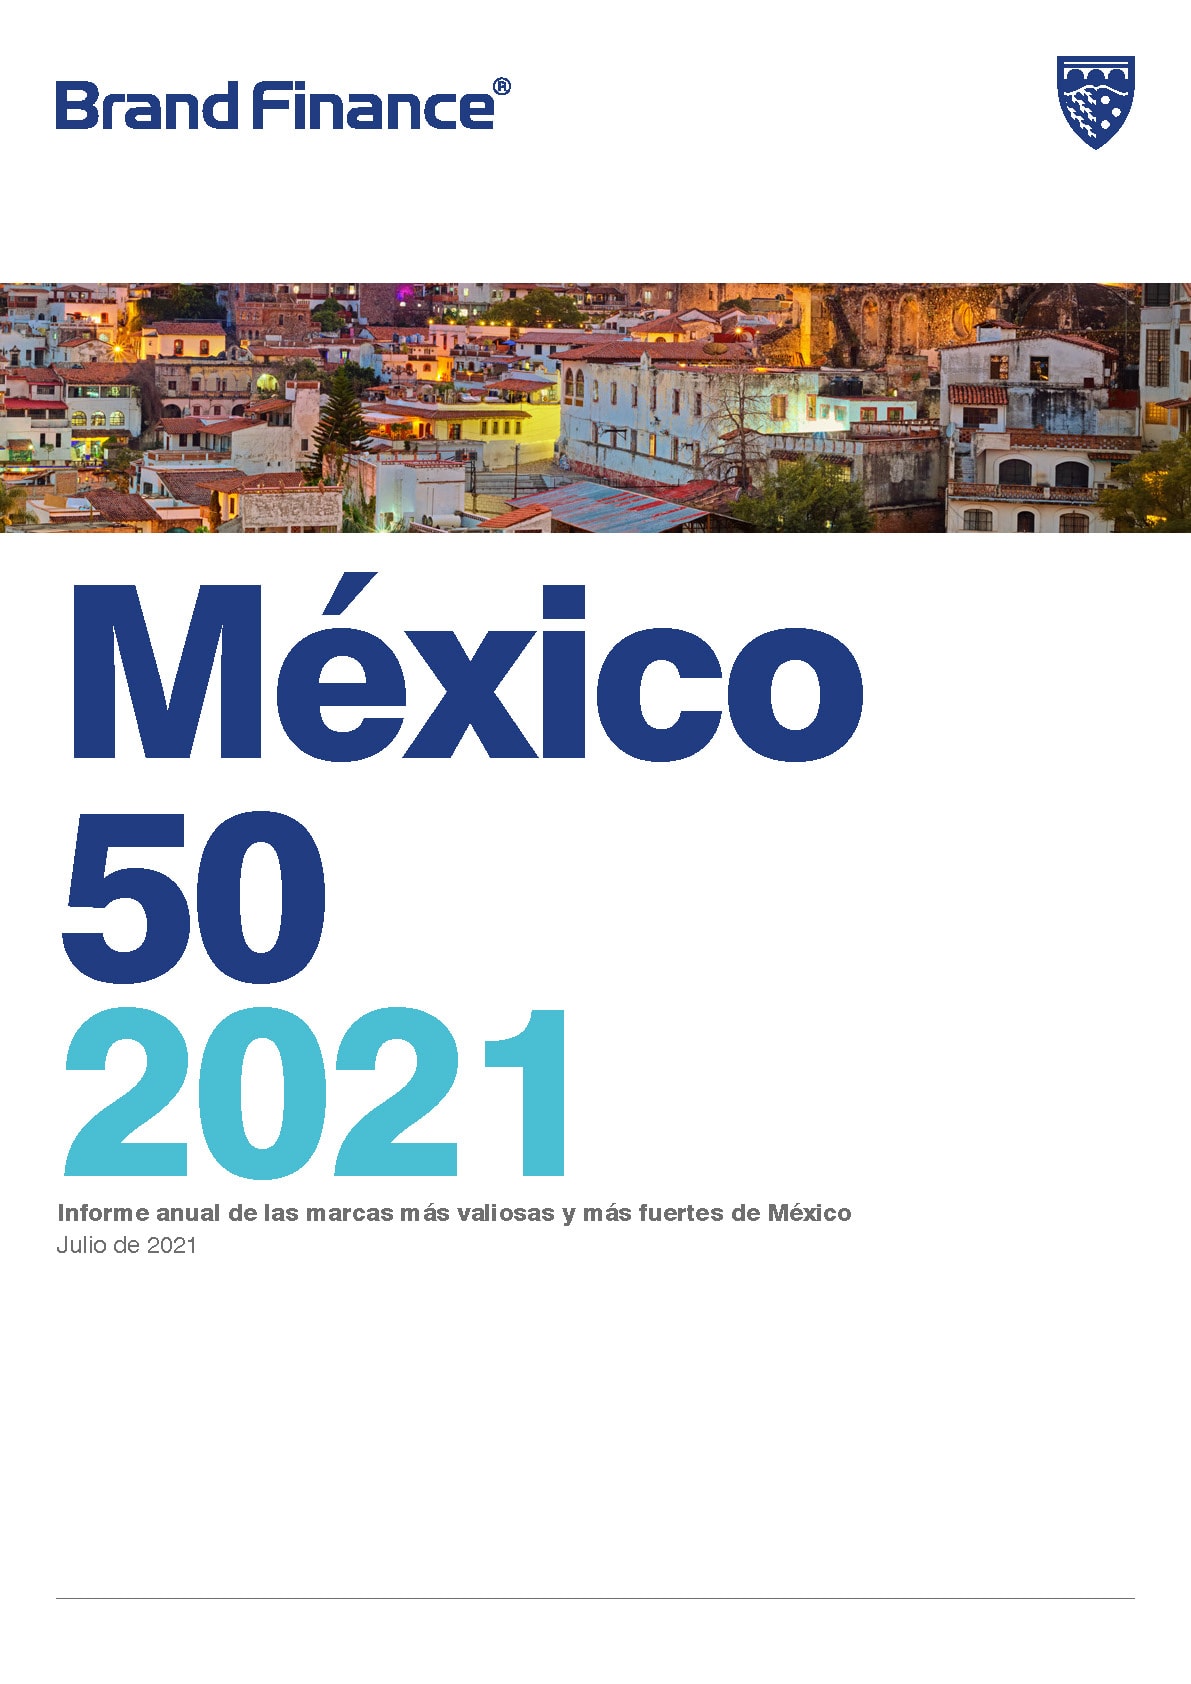 Brand Finance México 50 2021